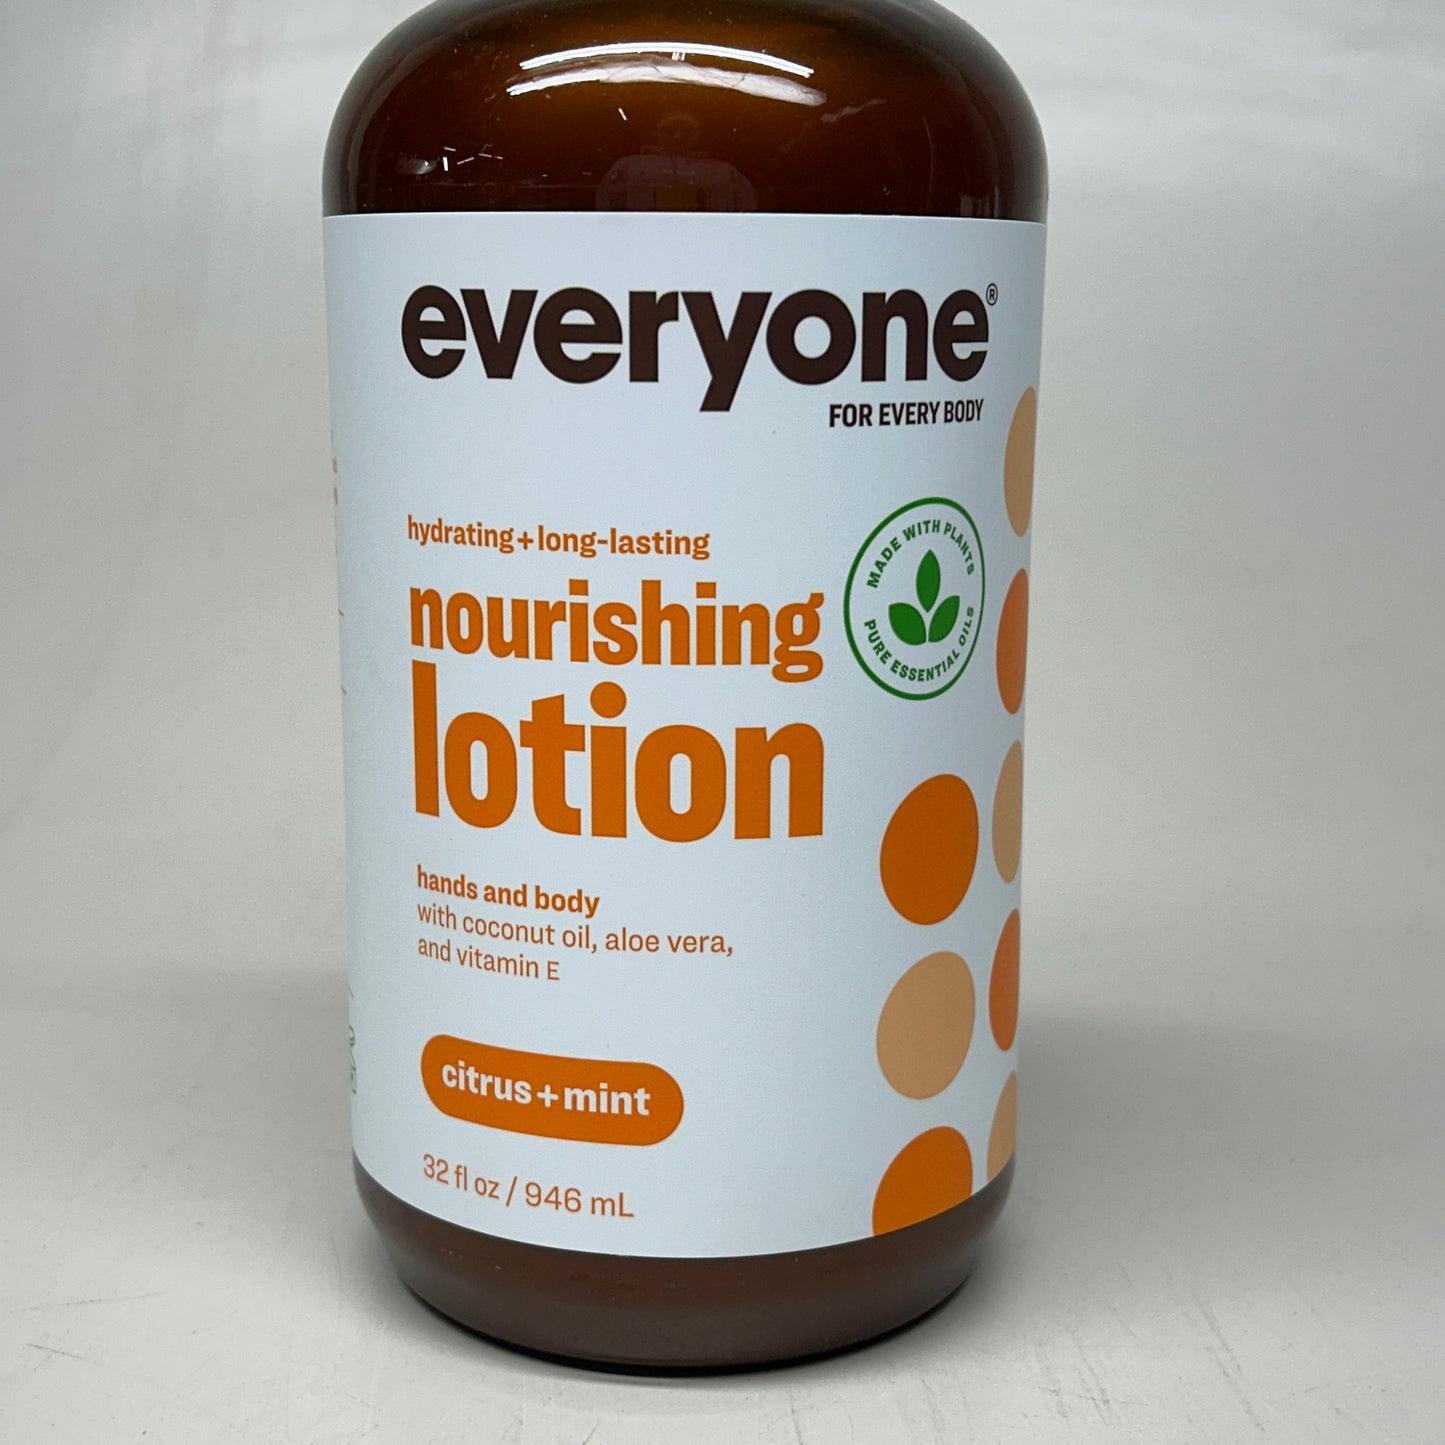 EVERYONE (2 PACK) Hydrating Long-Lasting Nourishing Lotion Citrus + Mint (New)